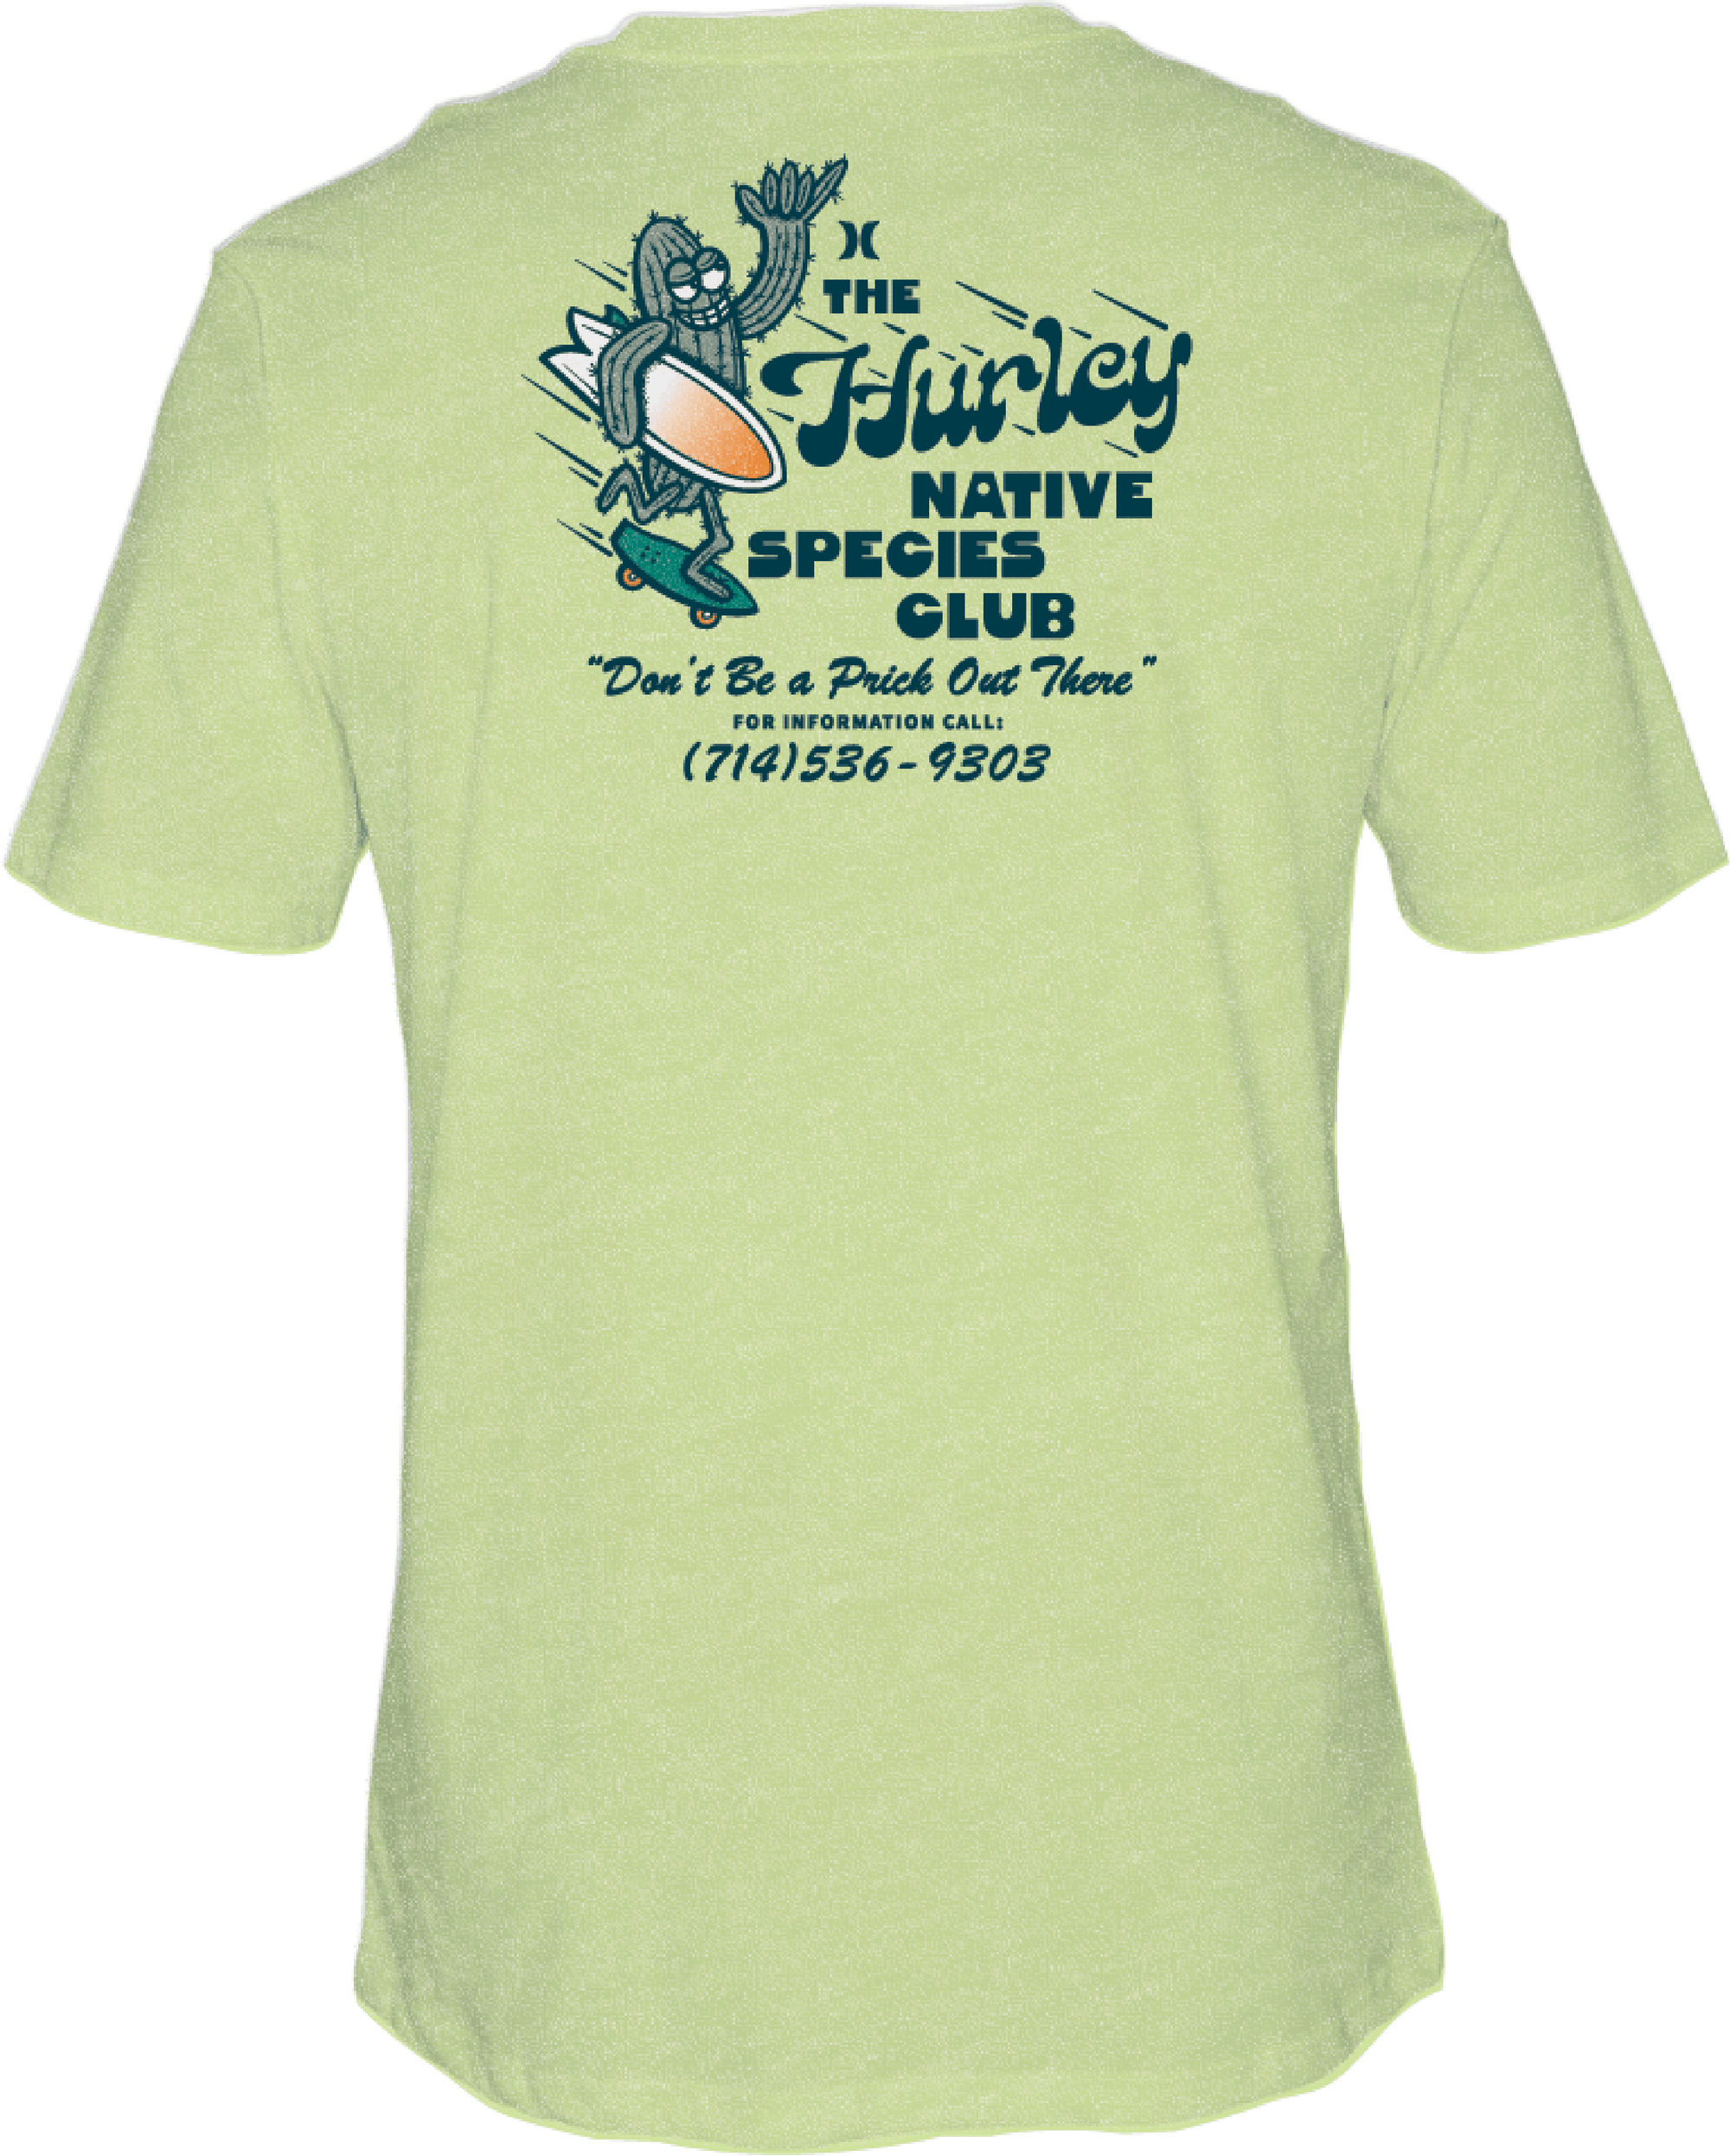 HURLEY Every Day Washed Shakti T-Shirt Bright Green Men's Short Sleeve T-Shirts Hurley 